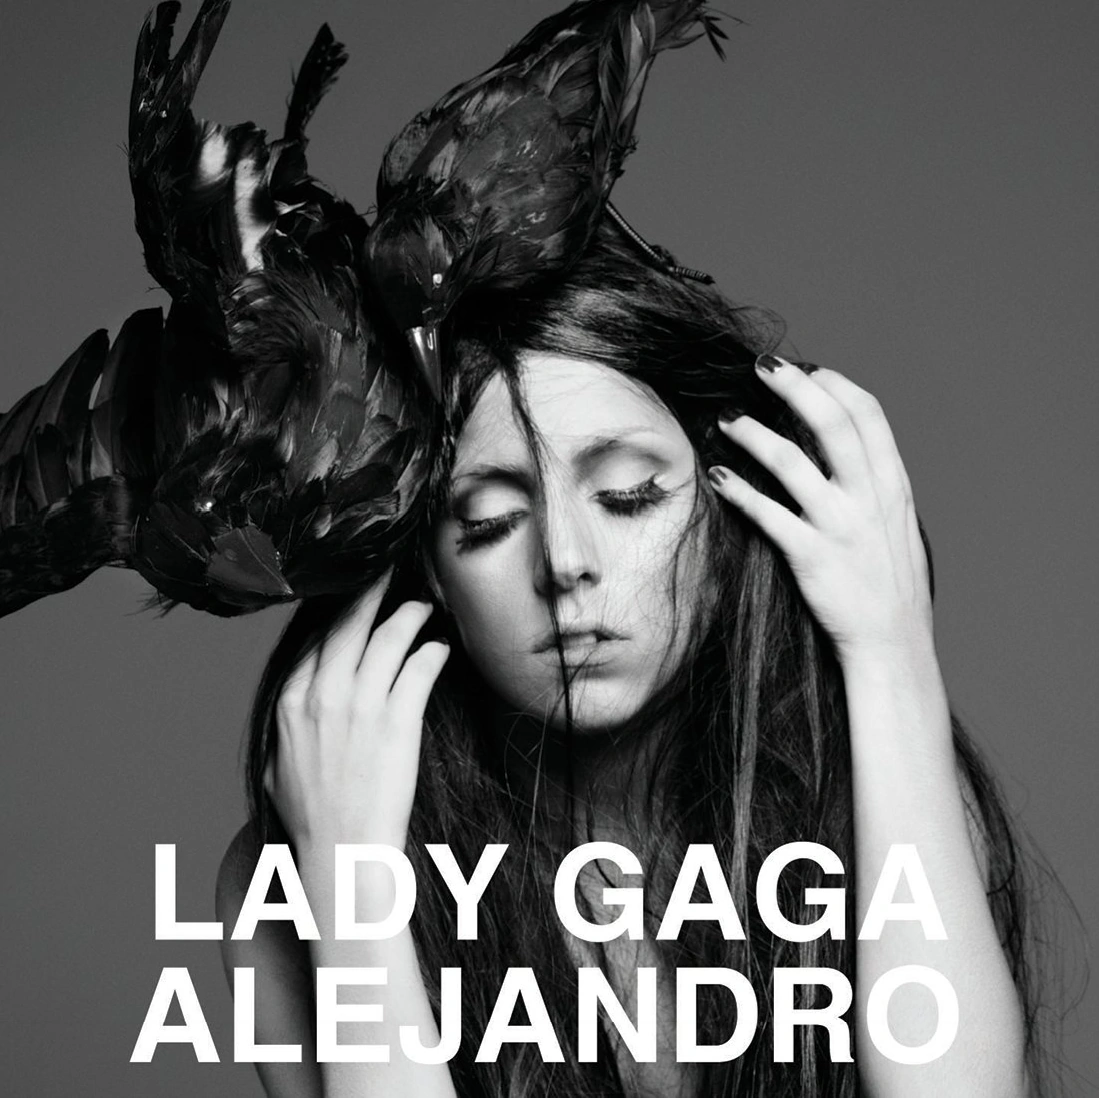 “Alejandro” Lyrics From Lady Gaga